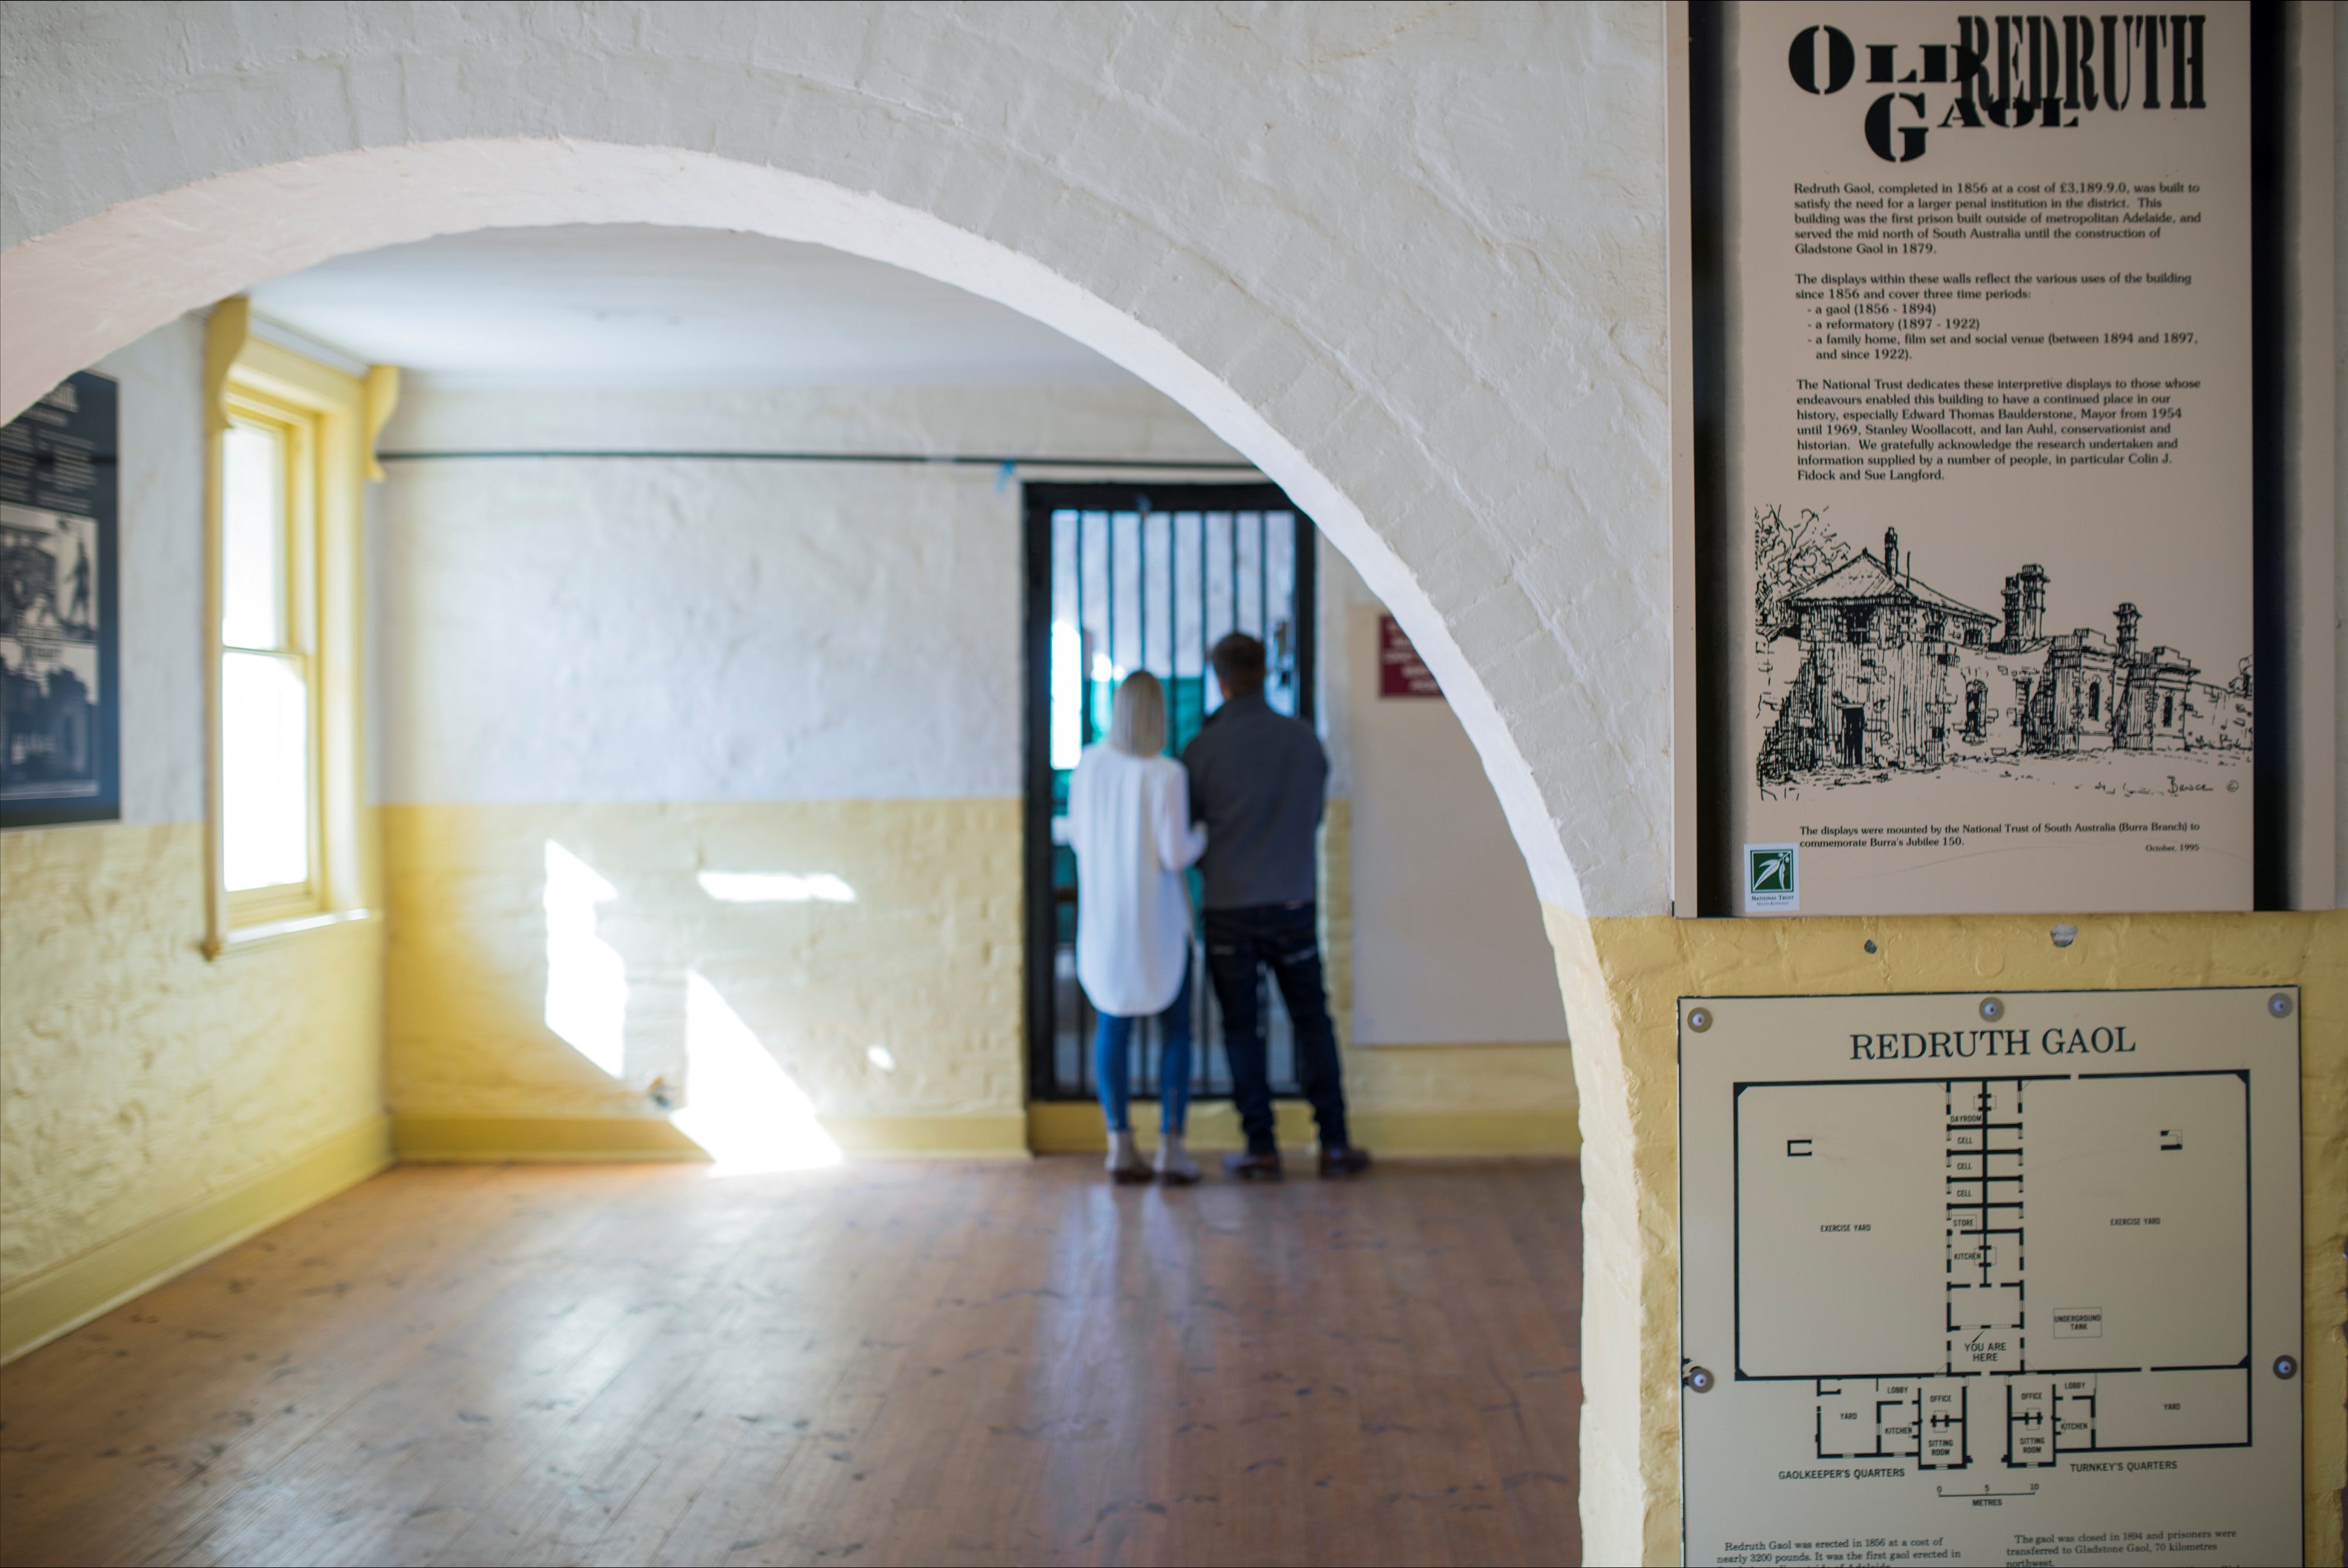 Redruth Gaol - Geraldton Accommodation